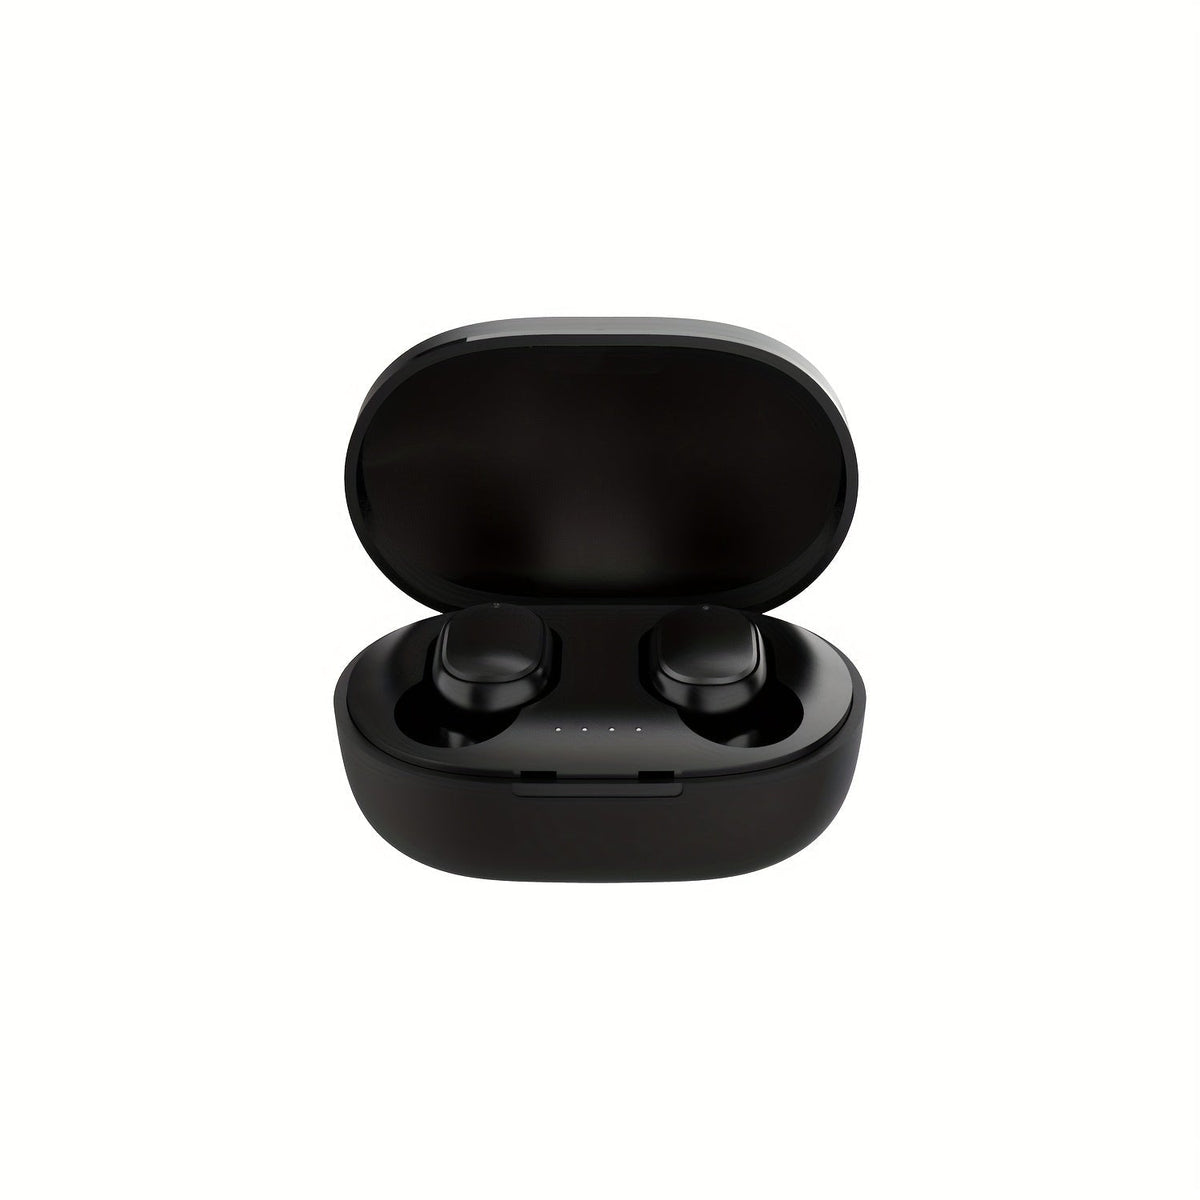 TWS Waterproof In-Ear Hi-fi Stereo Wireless Earbuds: Superb Audio Quality & Long Battery Life